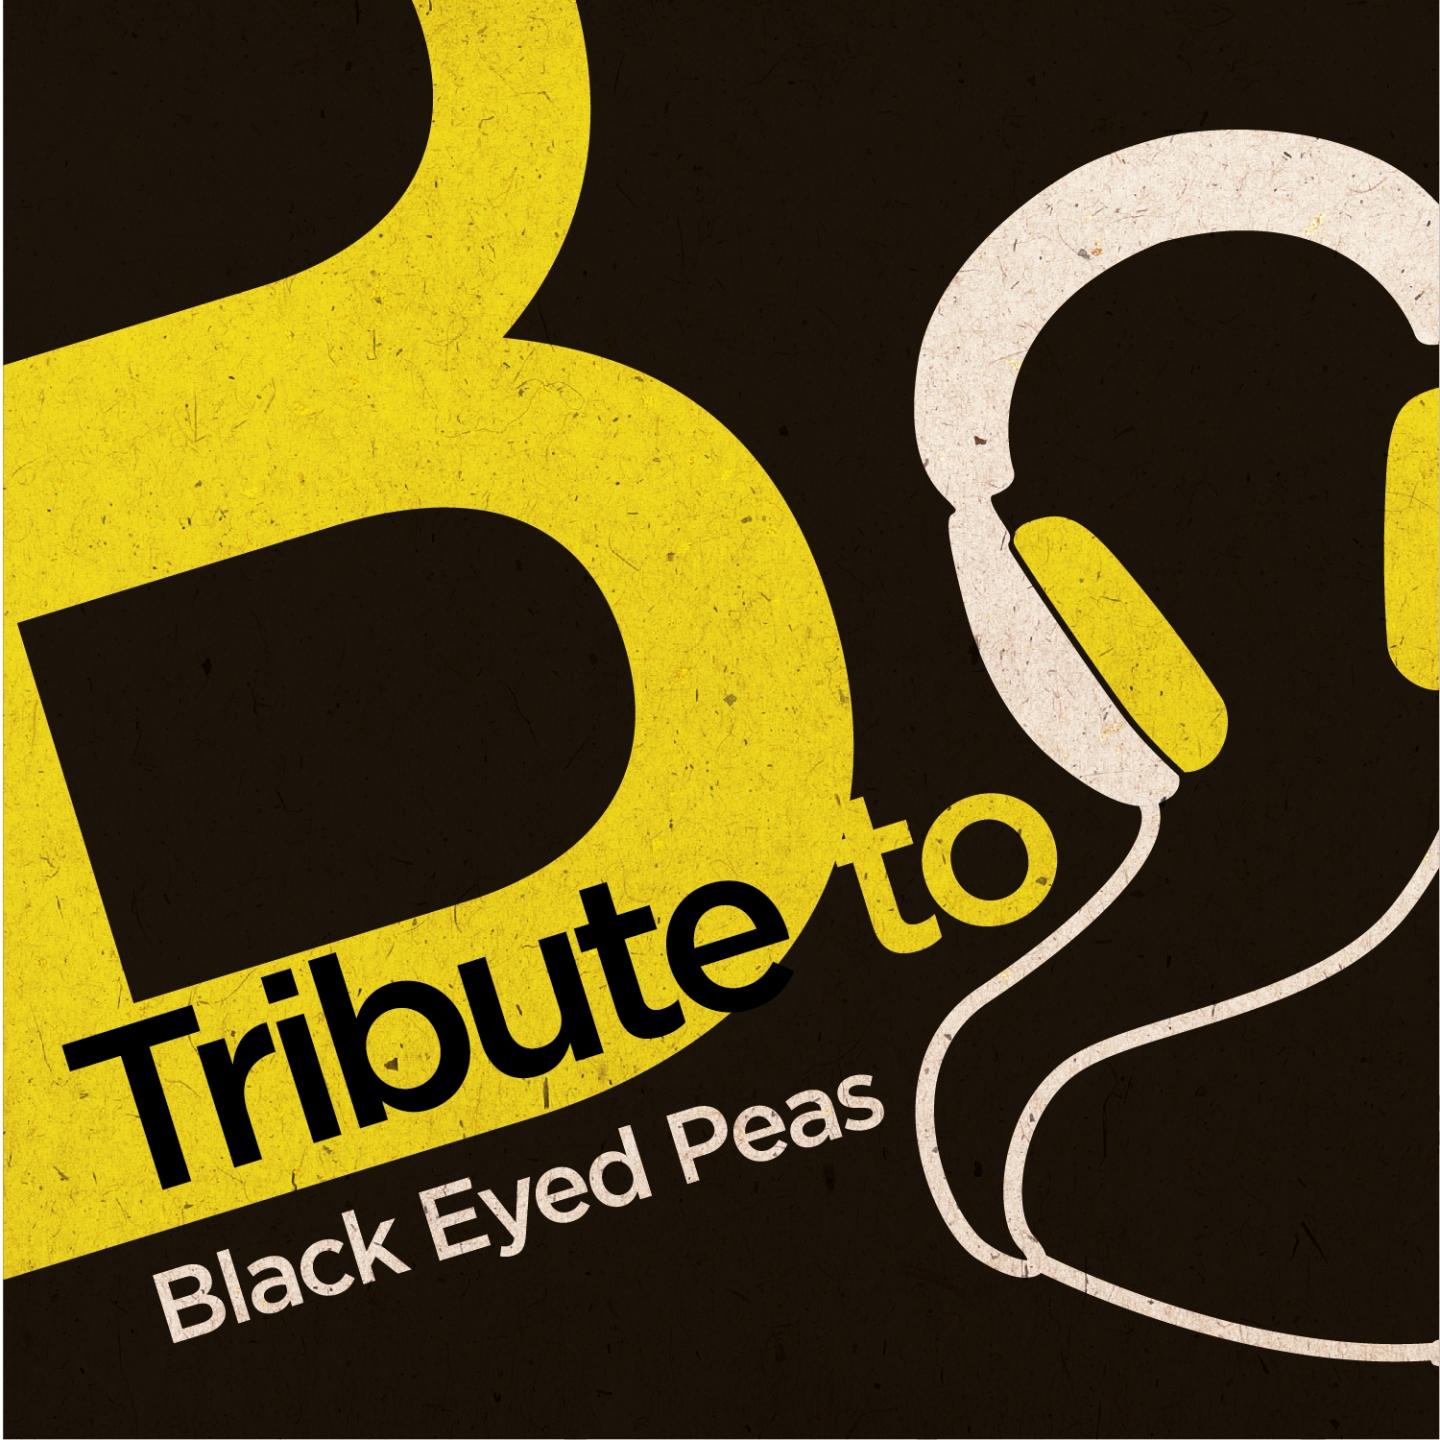 Tribute to Black Eyed Peas